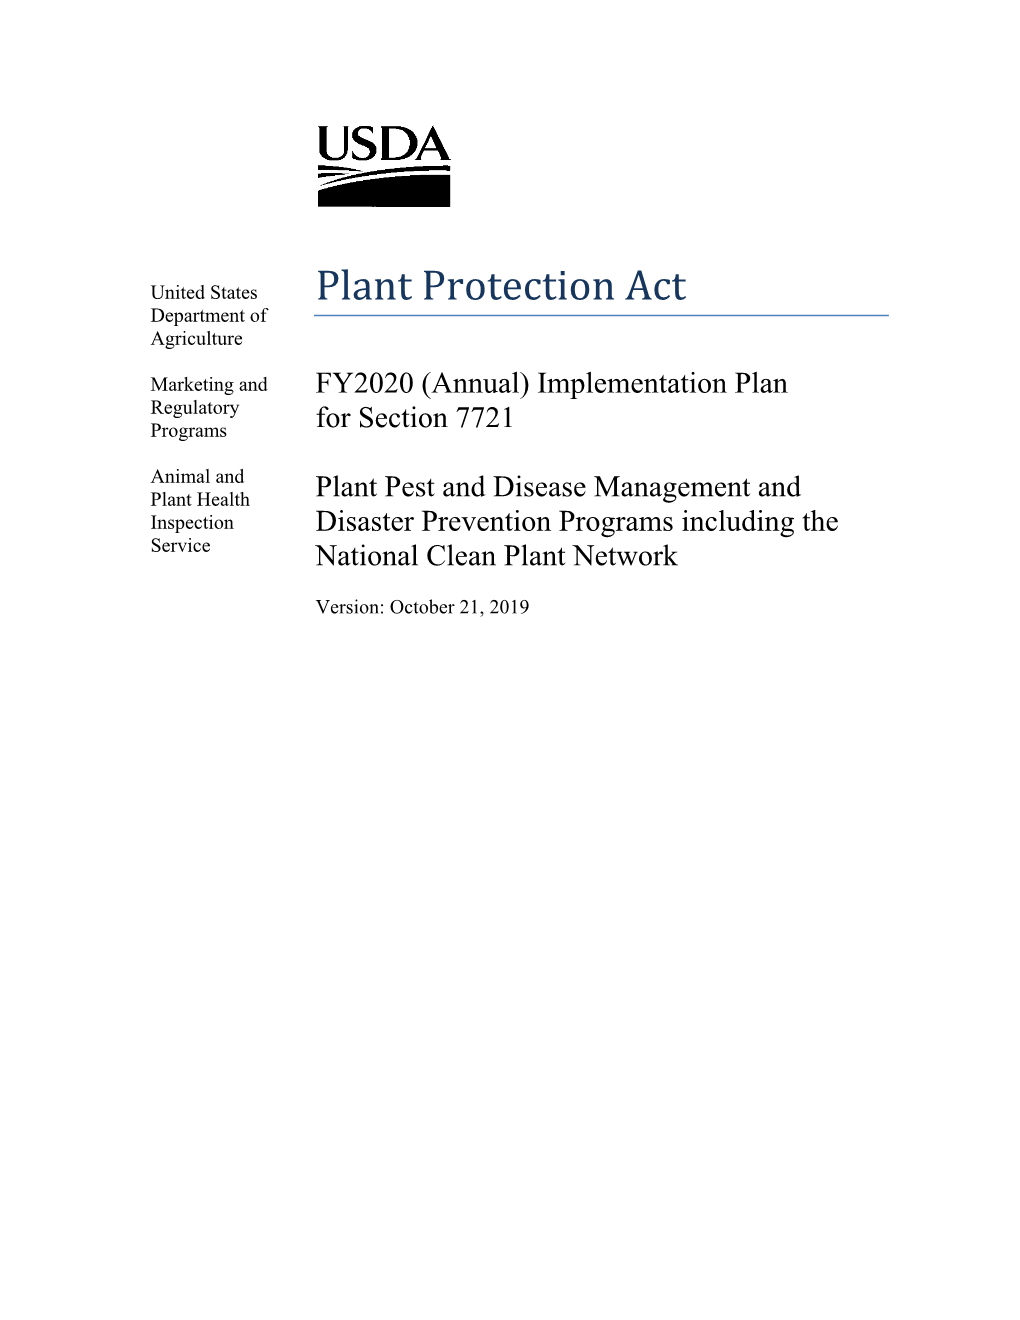 Implementation Plan Regulatory Programs for Section 7721